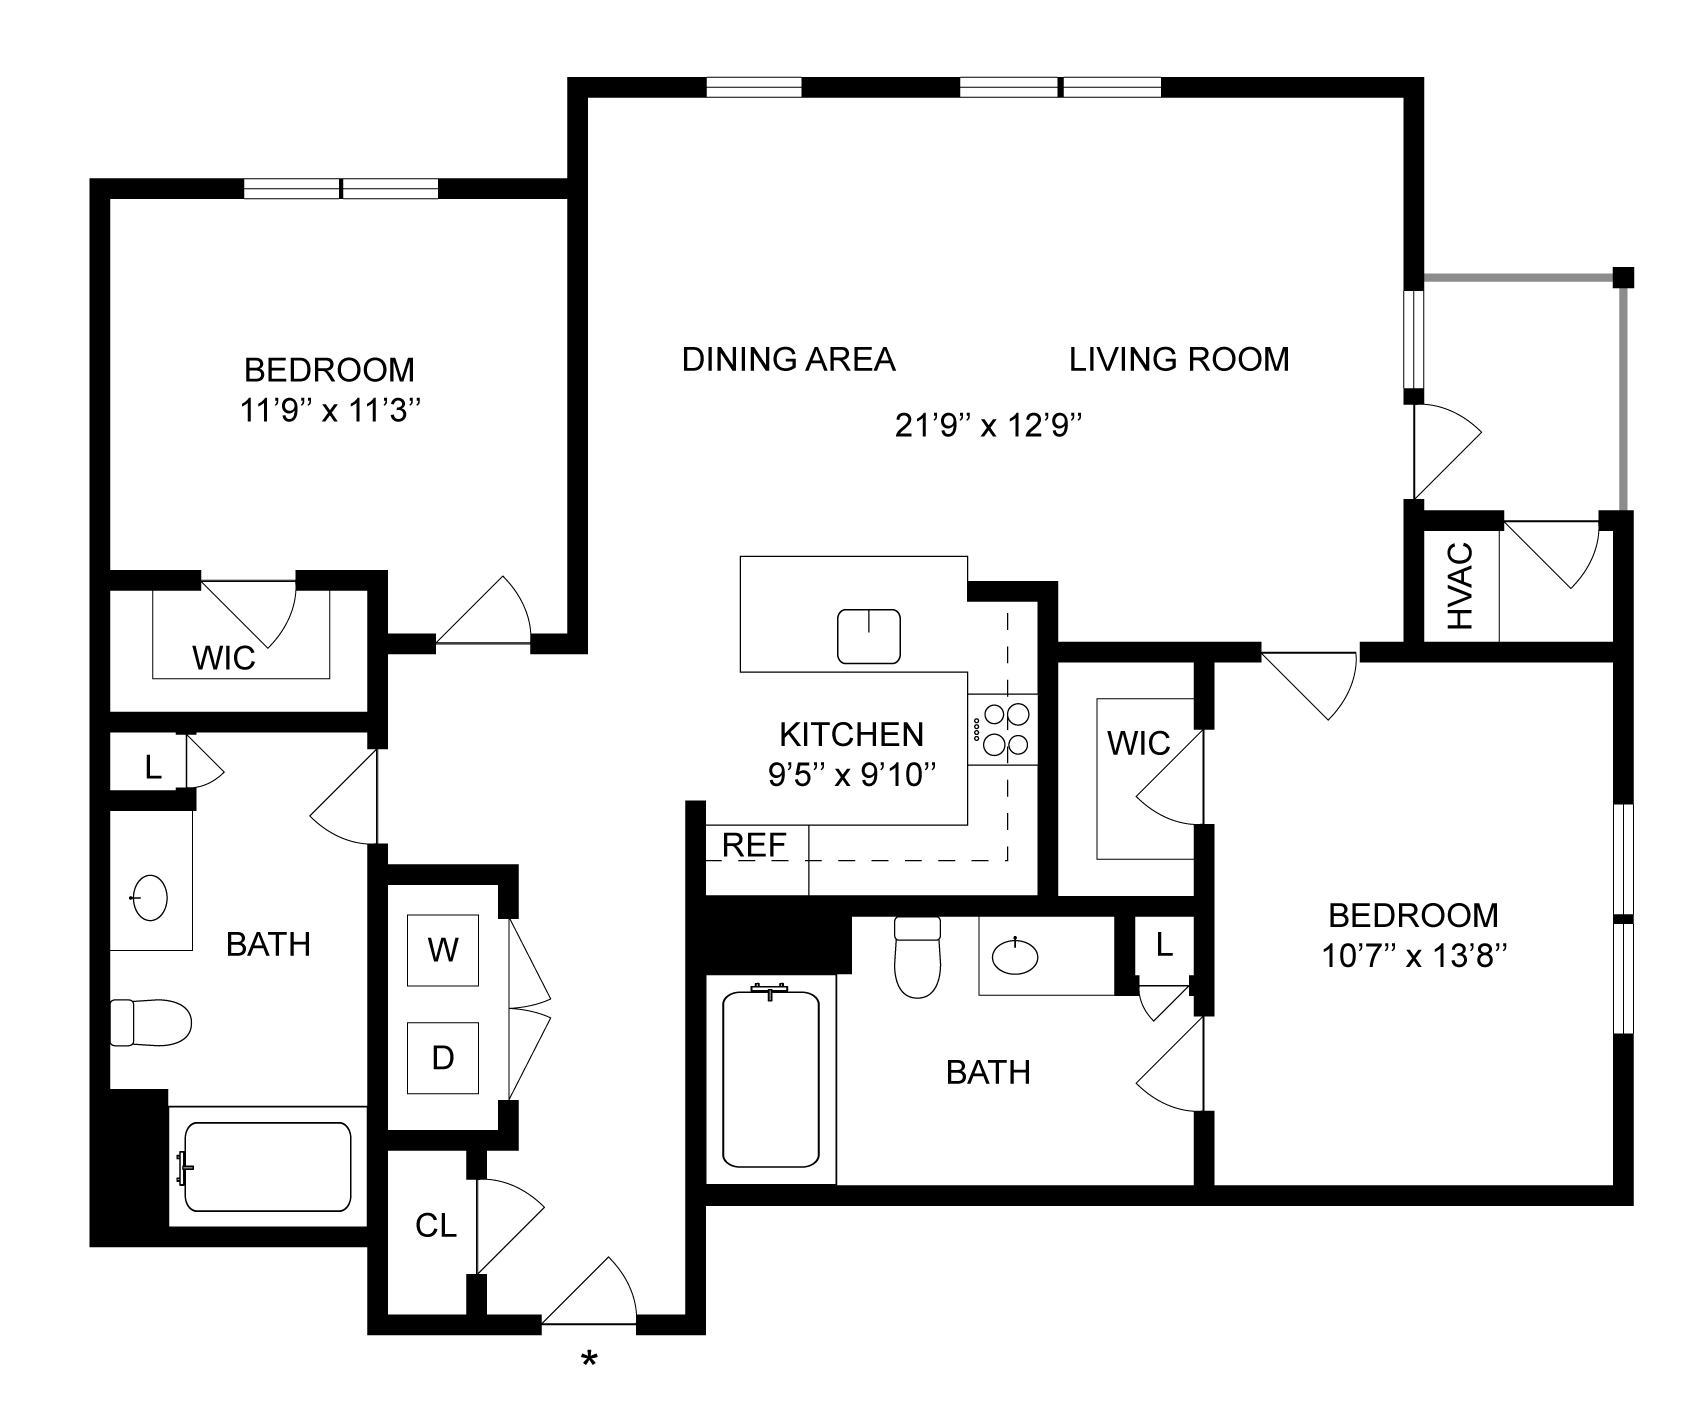 Floorplan for Apartment #10-B23, 2 bedroom unit at Halstead Hopkinton